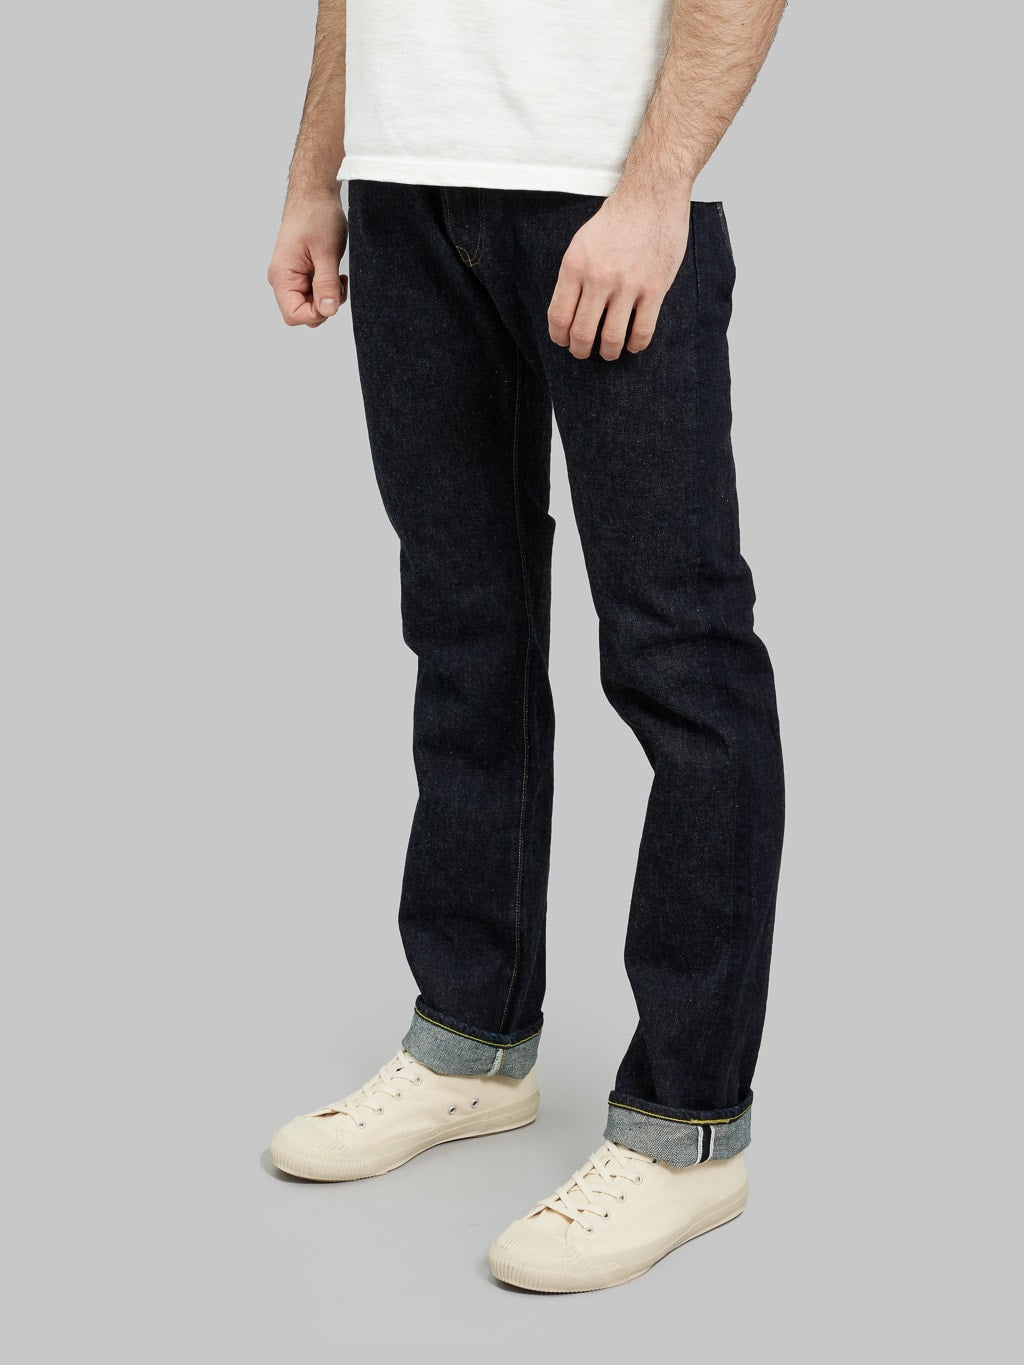 Fob factory slim straight denim jeans side fit